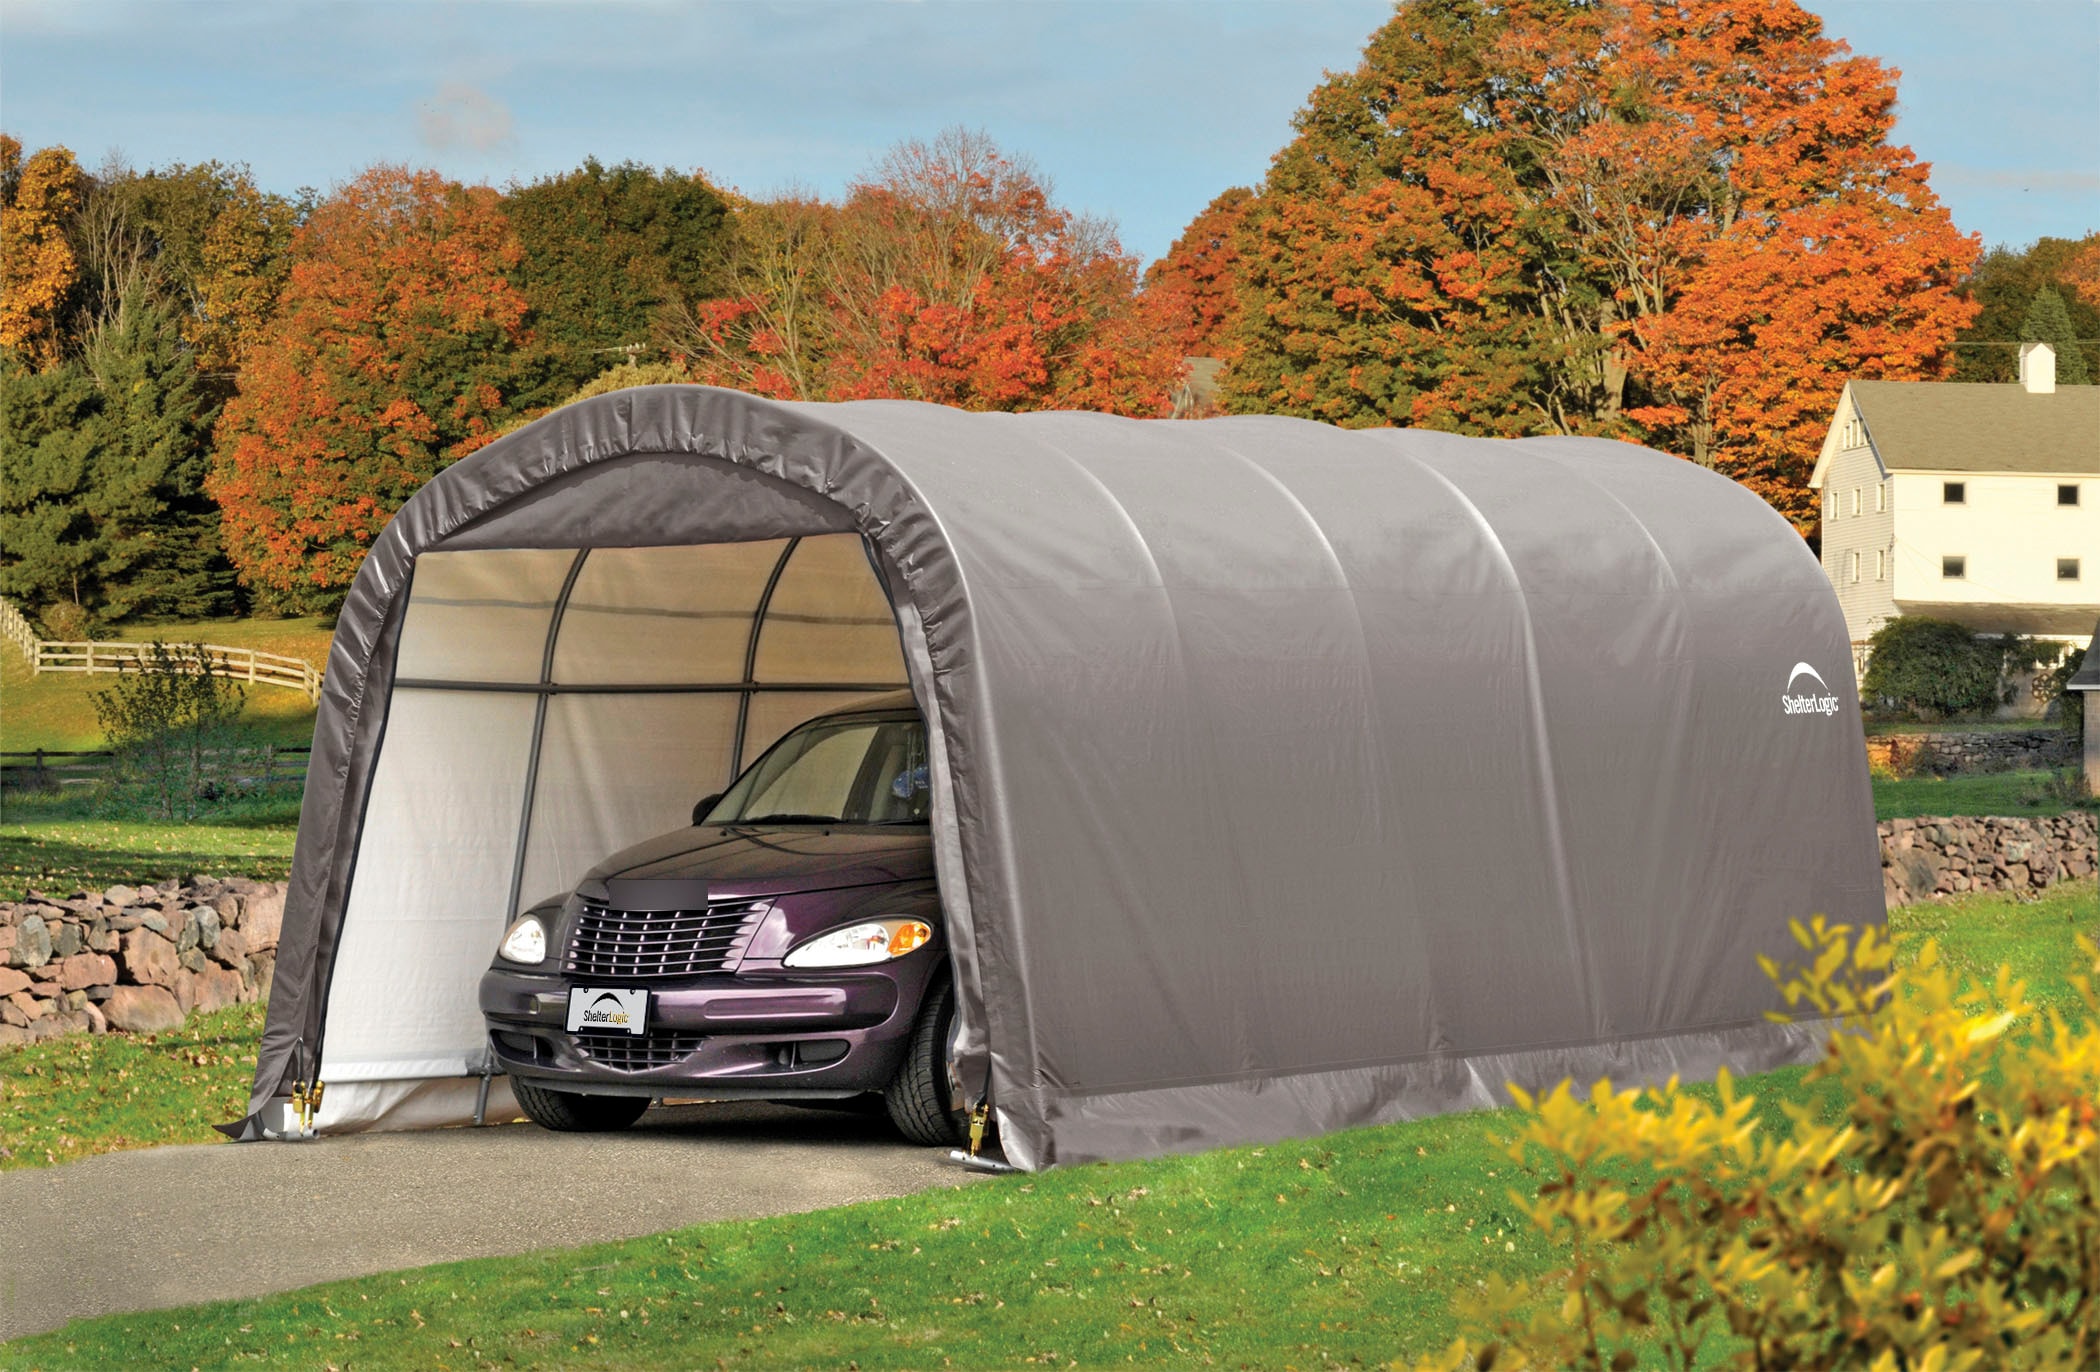 ShelterLogic Garage »Foliengarage«, 22,57m², Stahlgestell mit Polyethylen-Plane